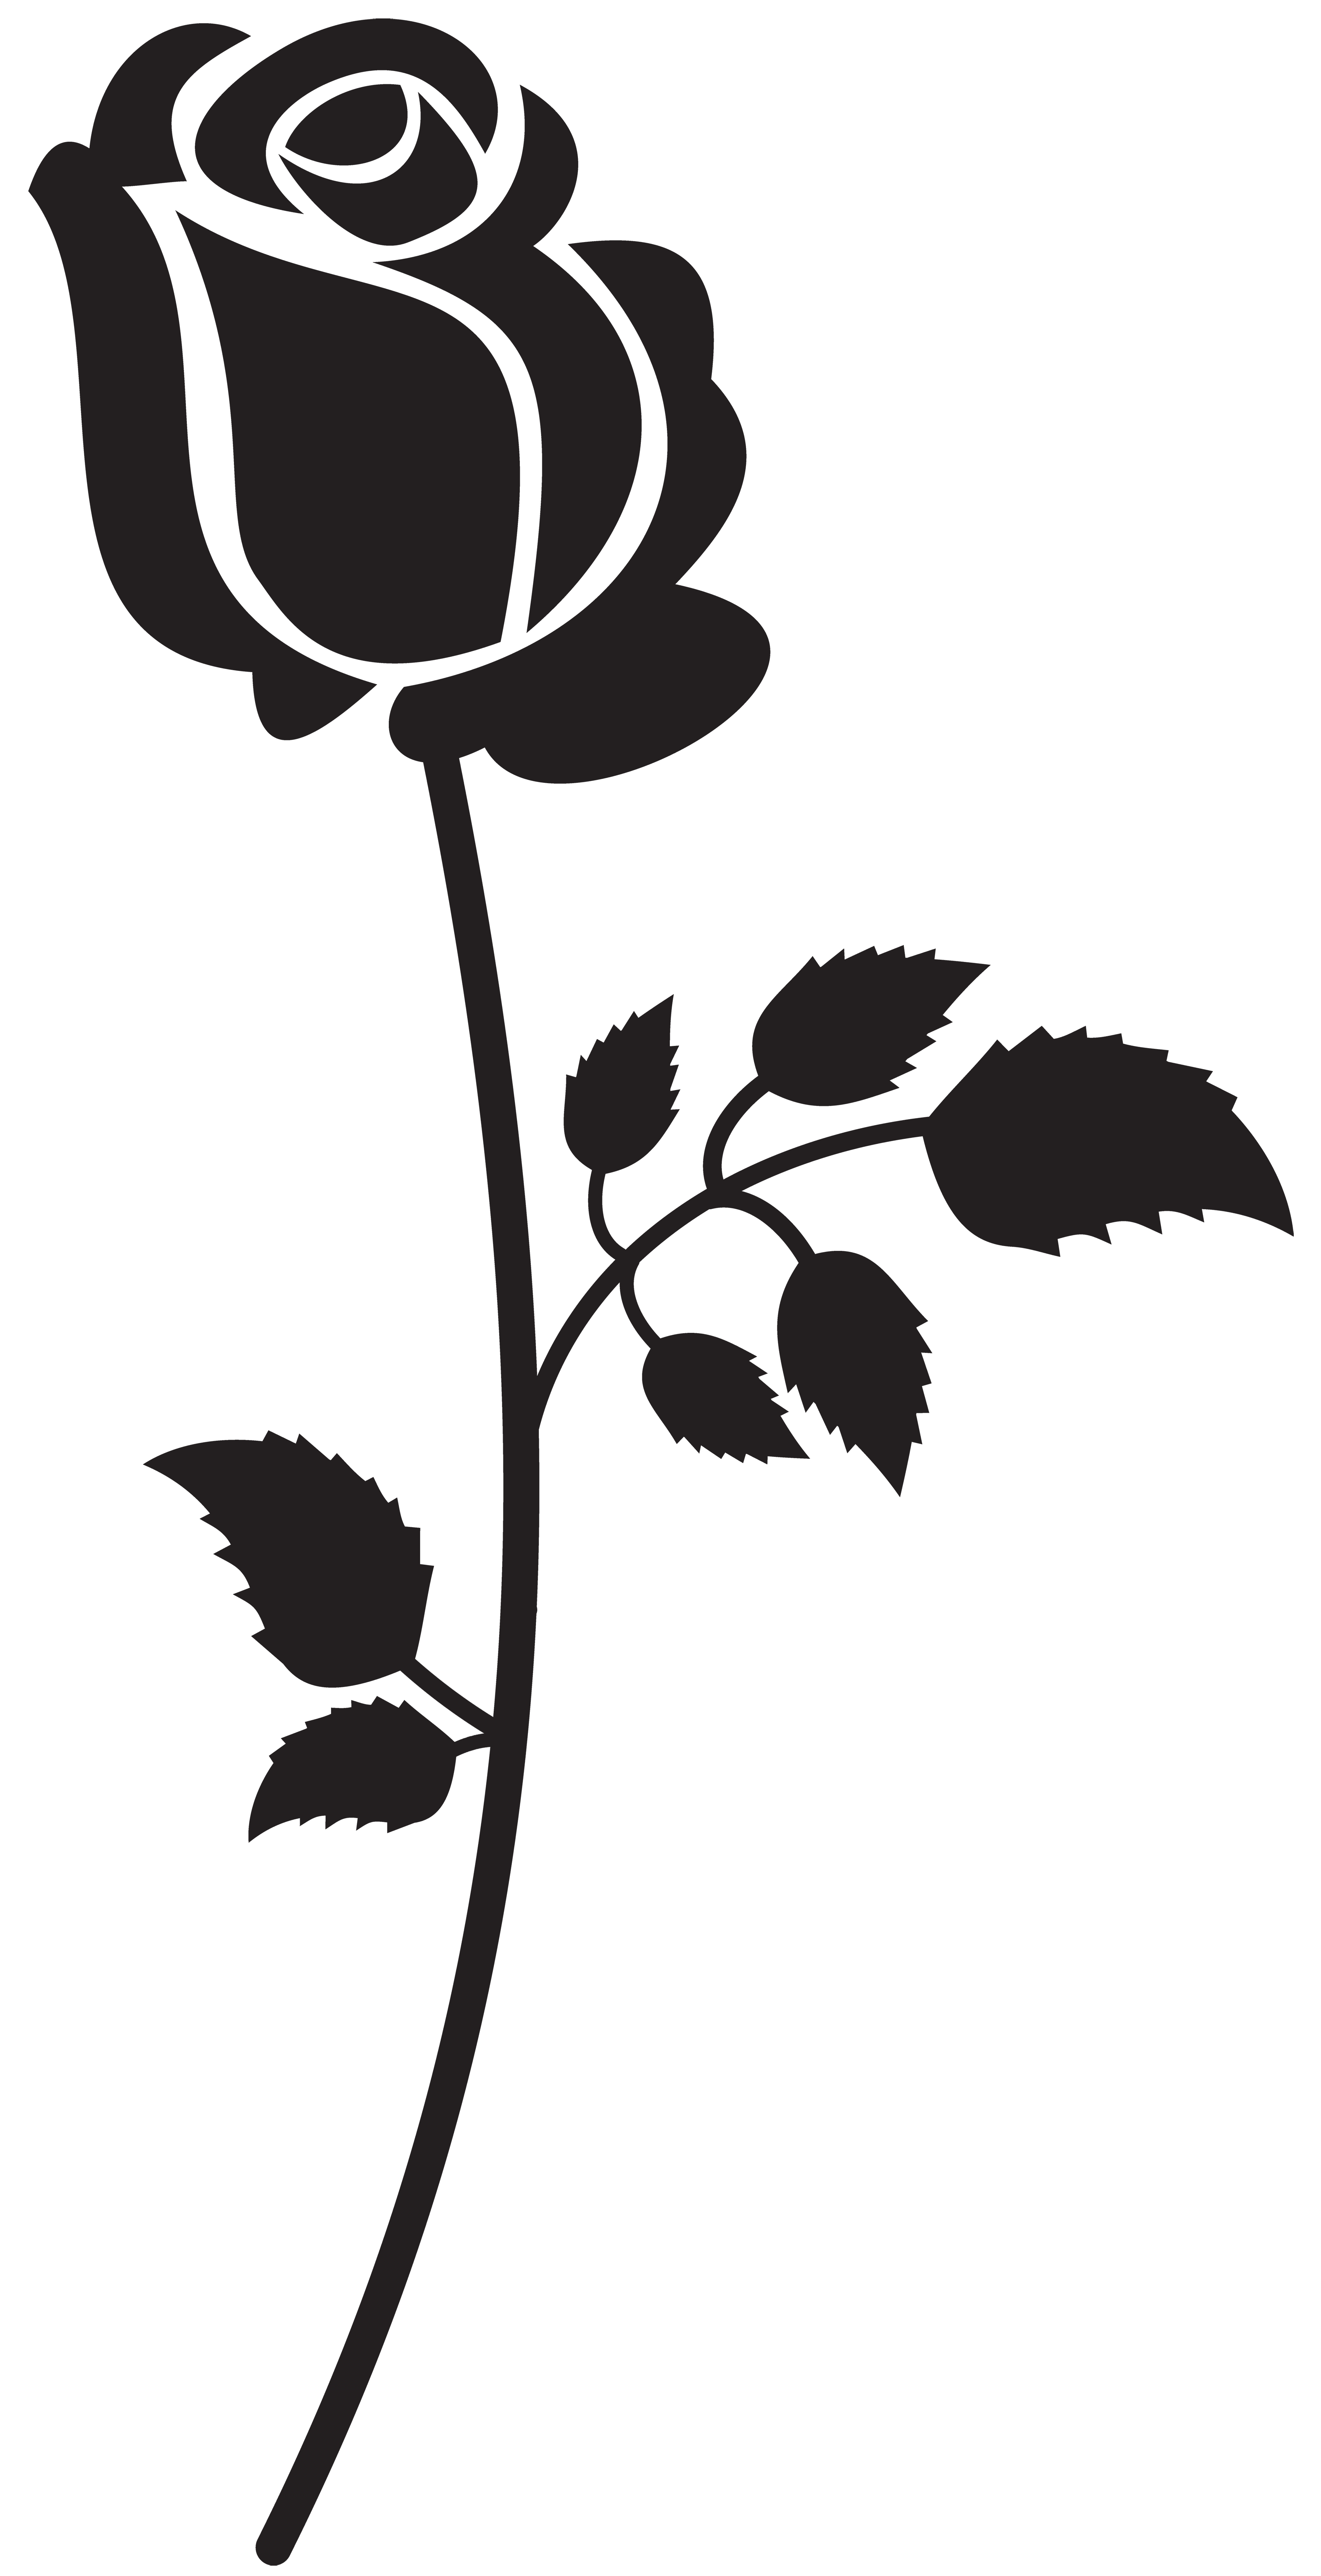 rose silhouette clip art